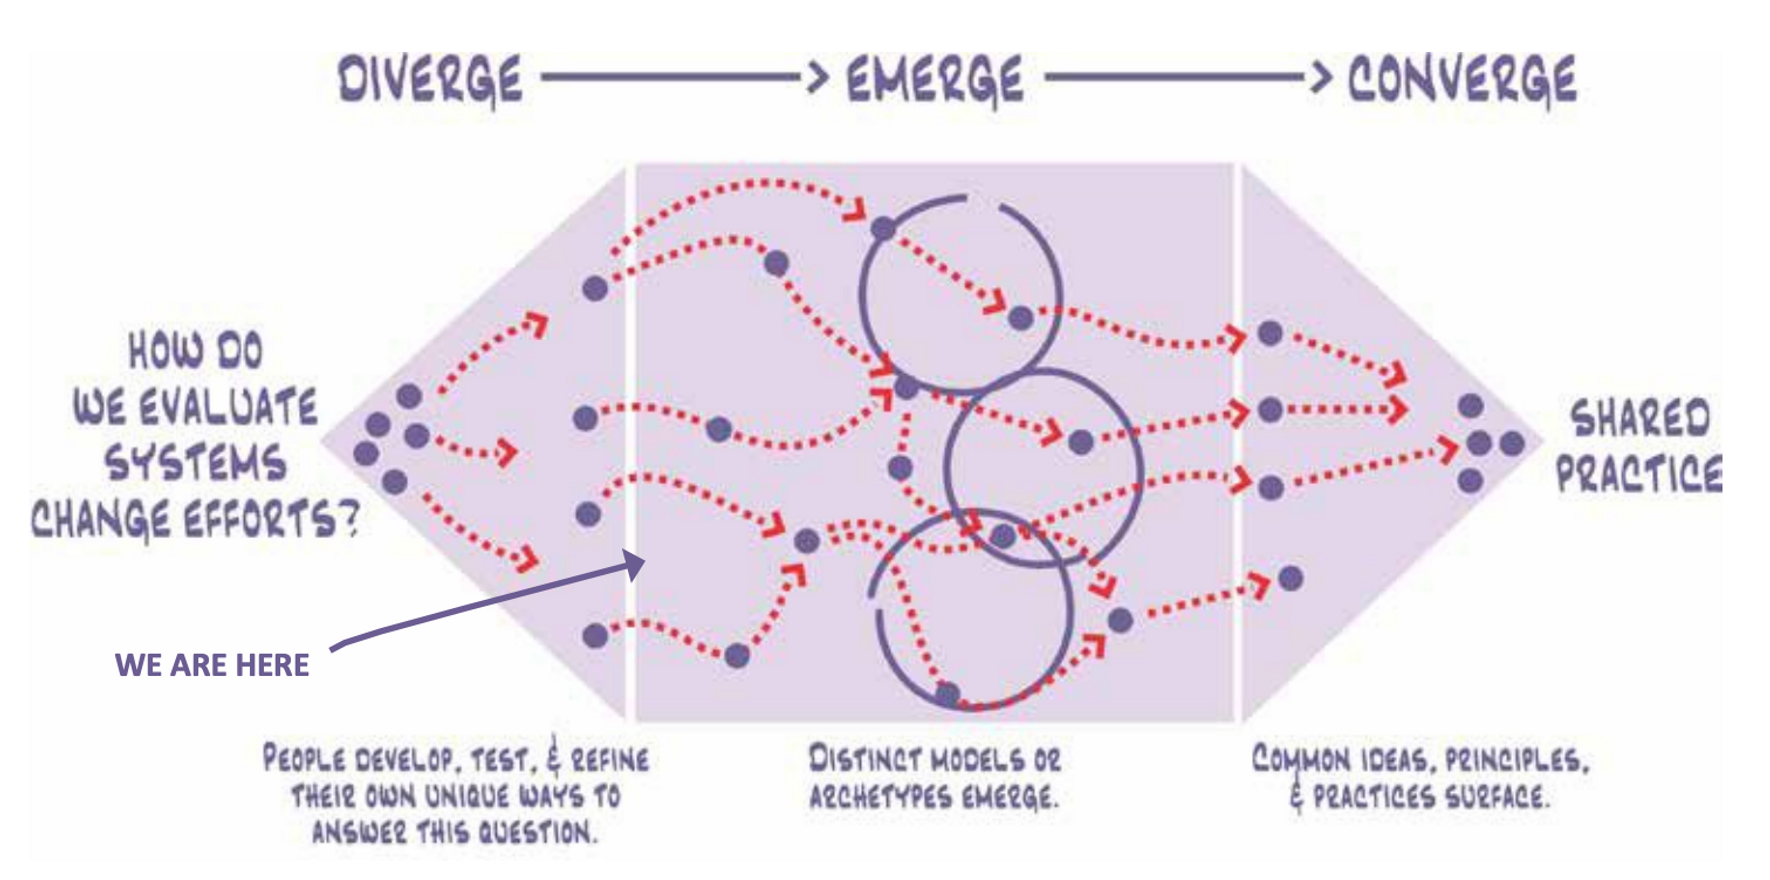 diverge-emerge-converge-map